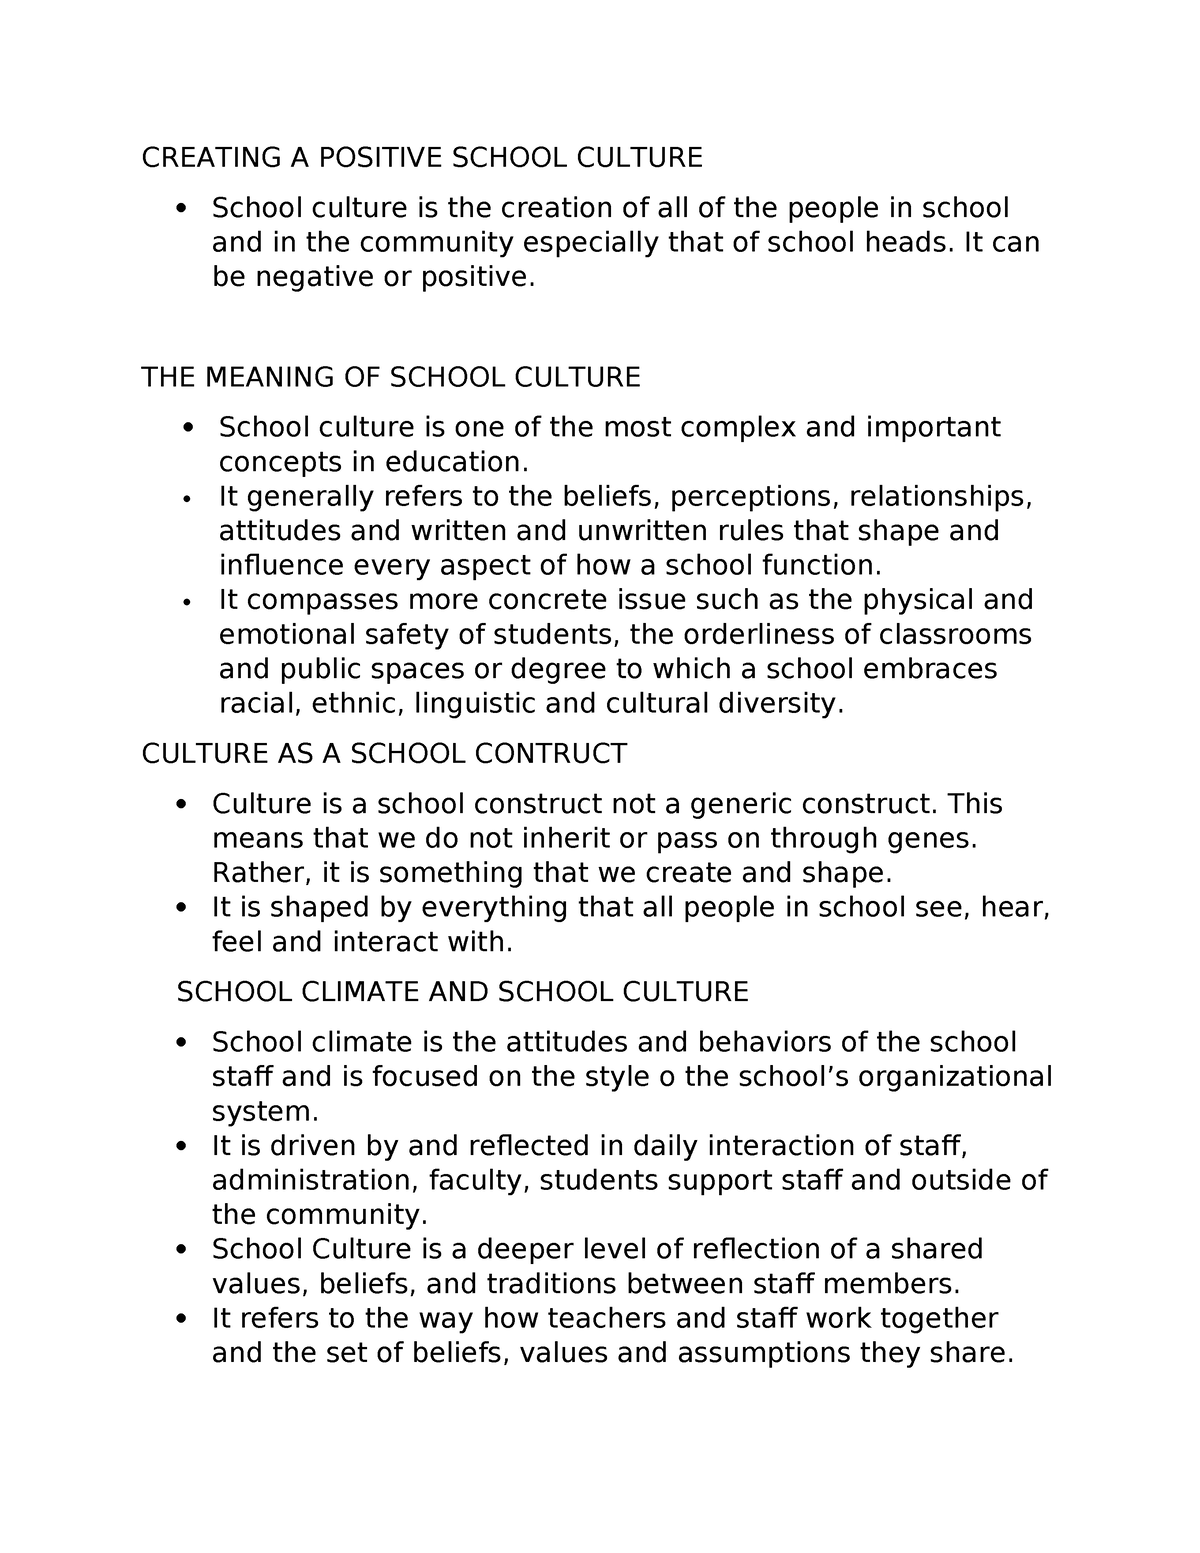 Creating A Positive School Culture - CREATING A POSITIVE SCHOOL CULTURE ...